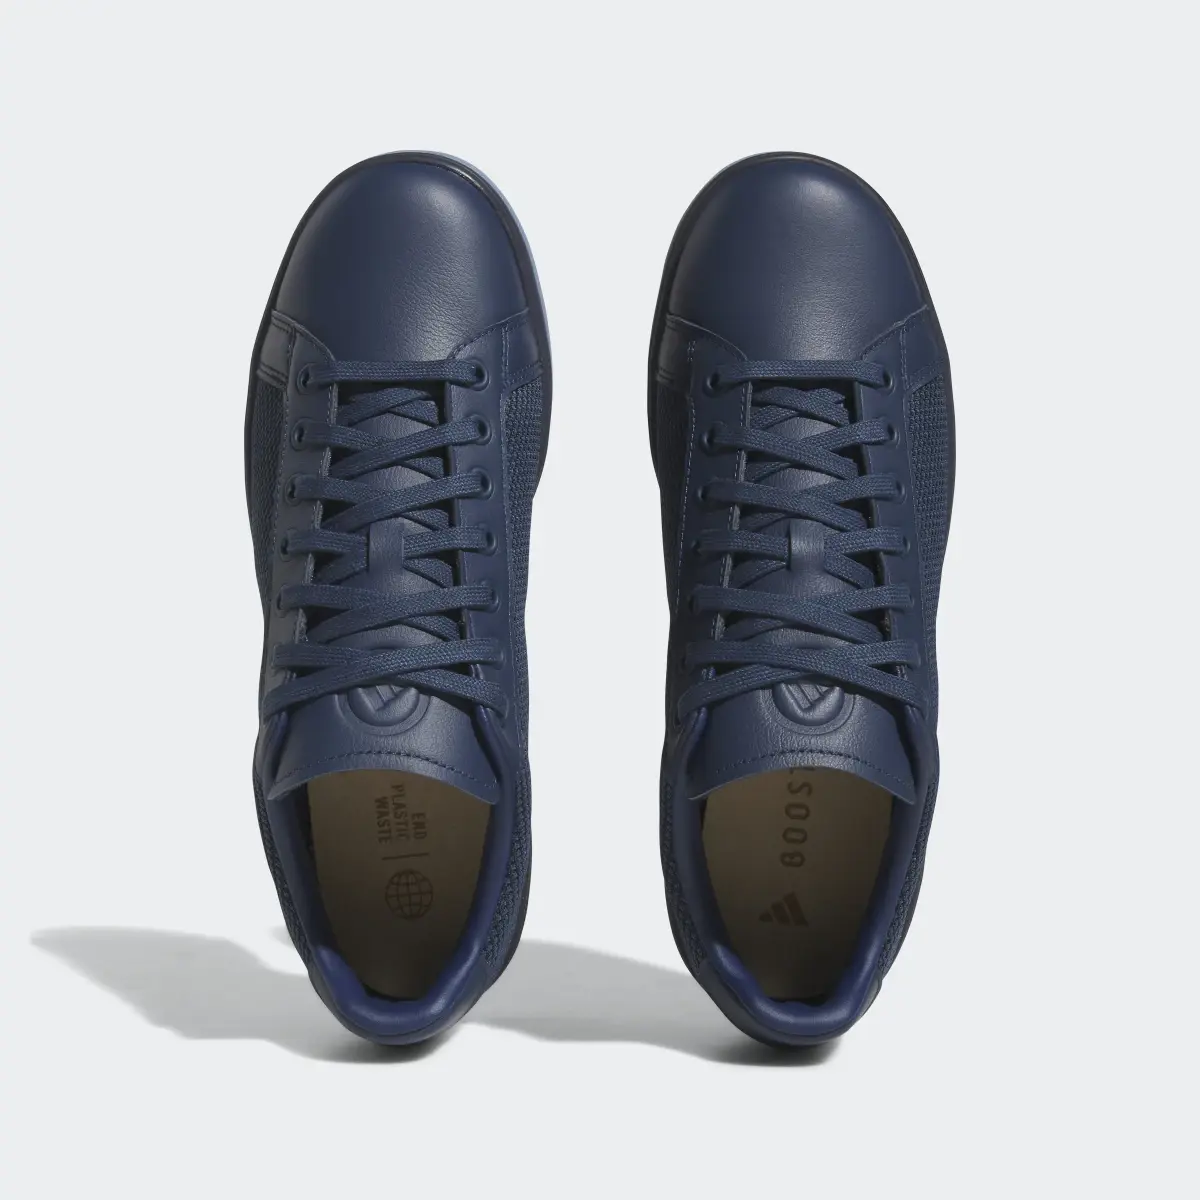 Adidas Chaussure de golf sans crampons Go-To 1. 3